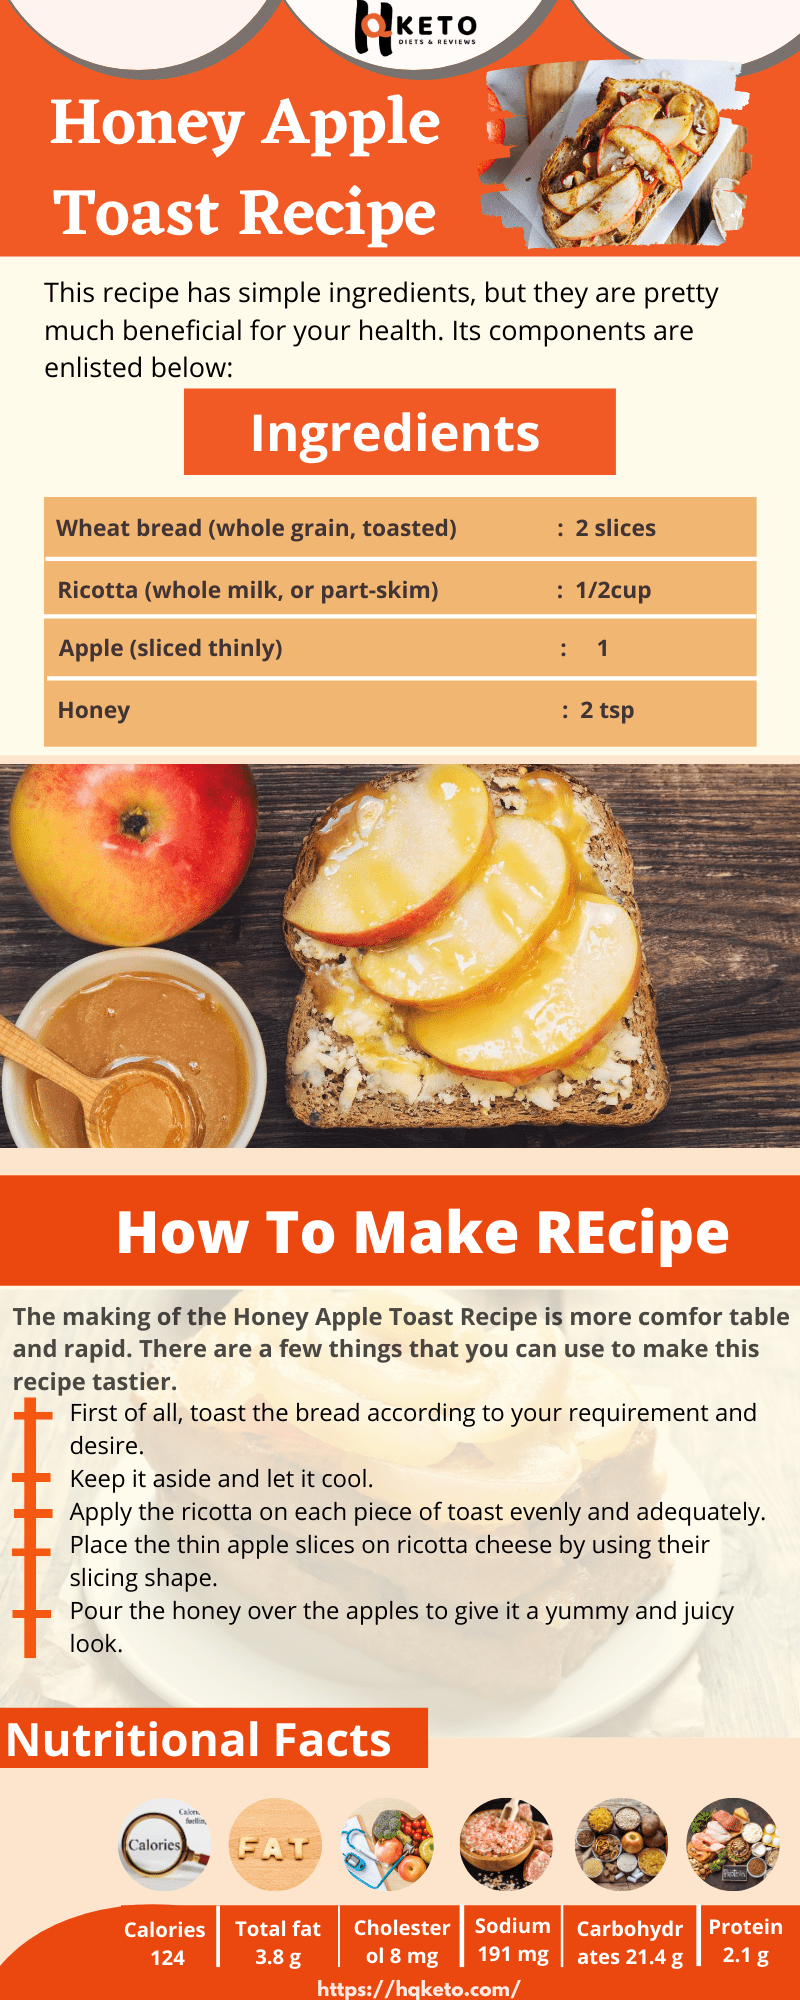 Keto Friendly Honey Apple Toast Recipe for Breakfast